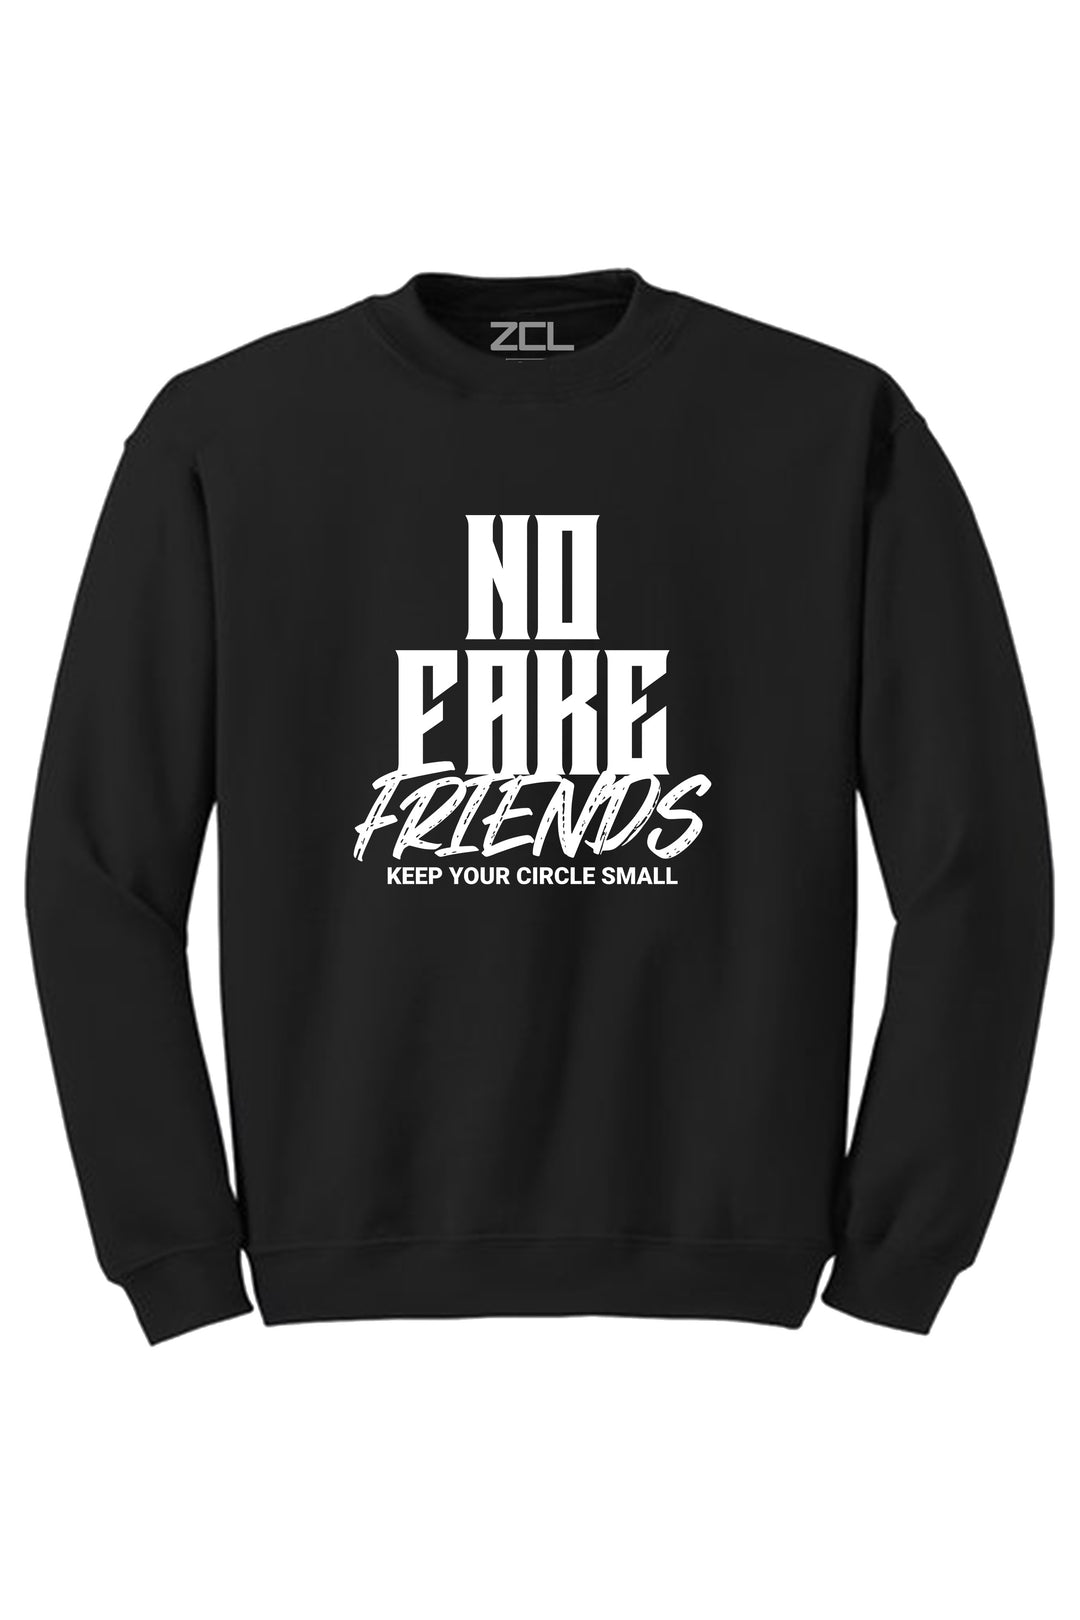 No Fake Friends Crewneck Sweatshirt (White Logo) - Zamage